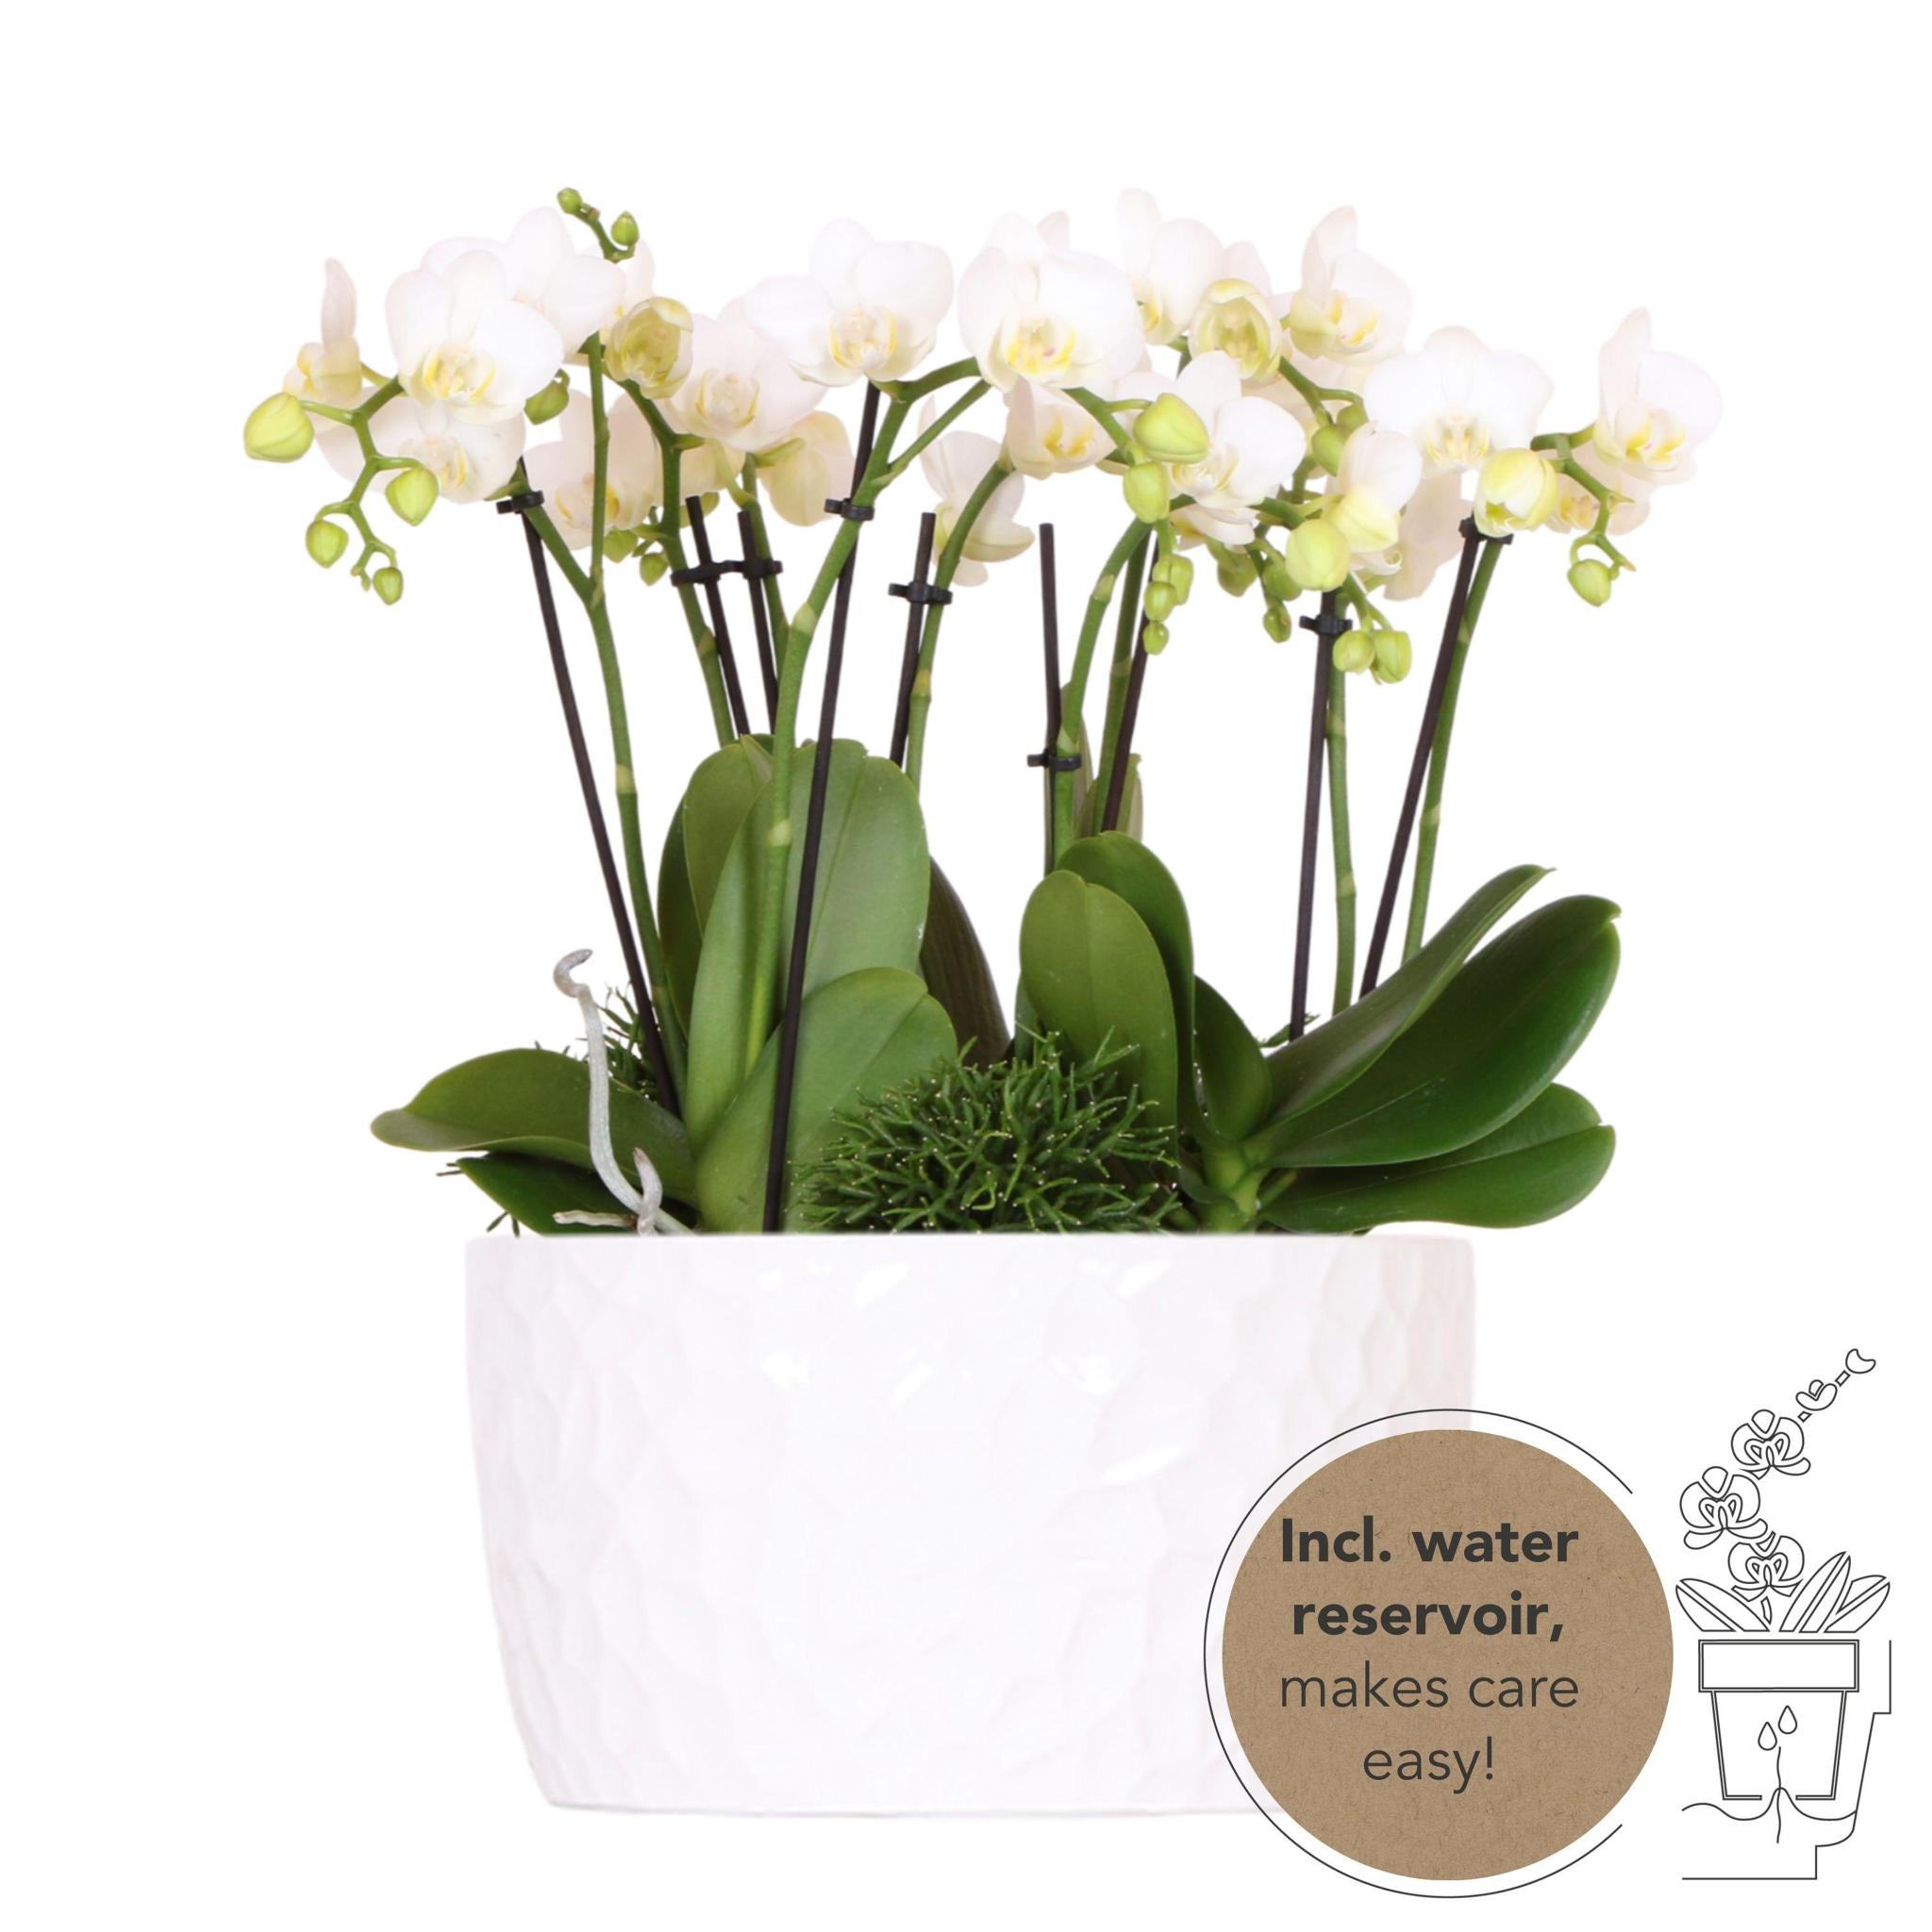 Everspring Witte plantenset in honey dish incl. Waterreservoir | drie witte orchideeën amabilis 9cm en drie groene planten rhipsalis | jungle bouquet wit met zelfvoorzienend waterr